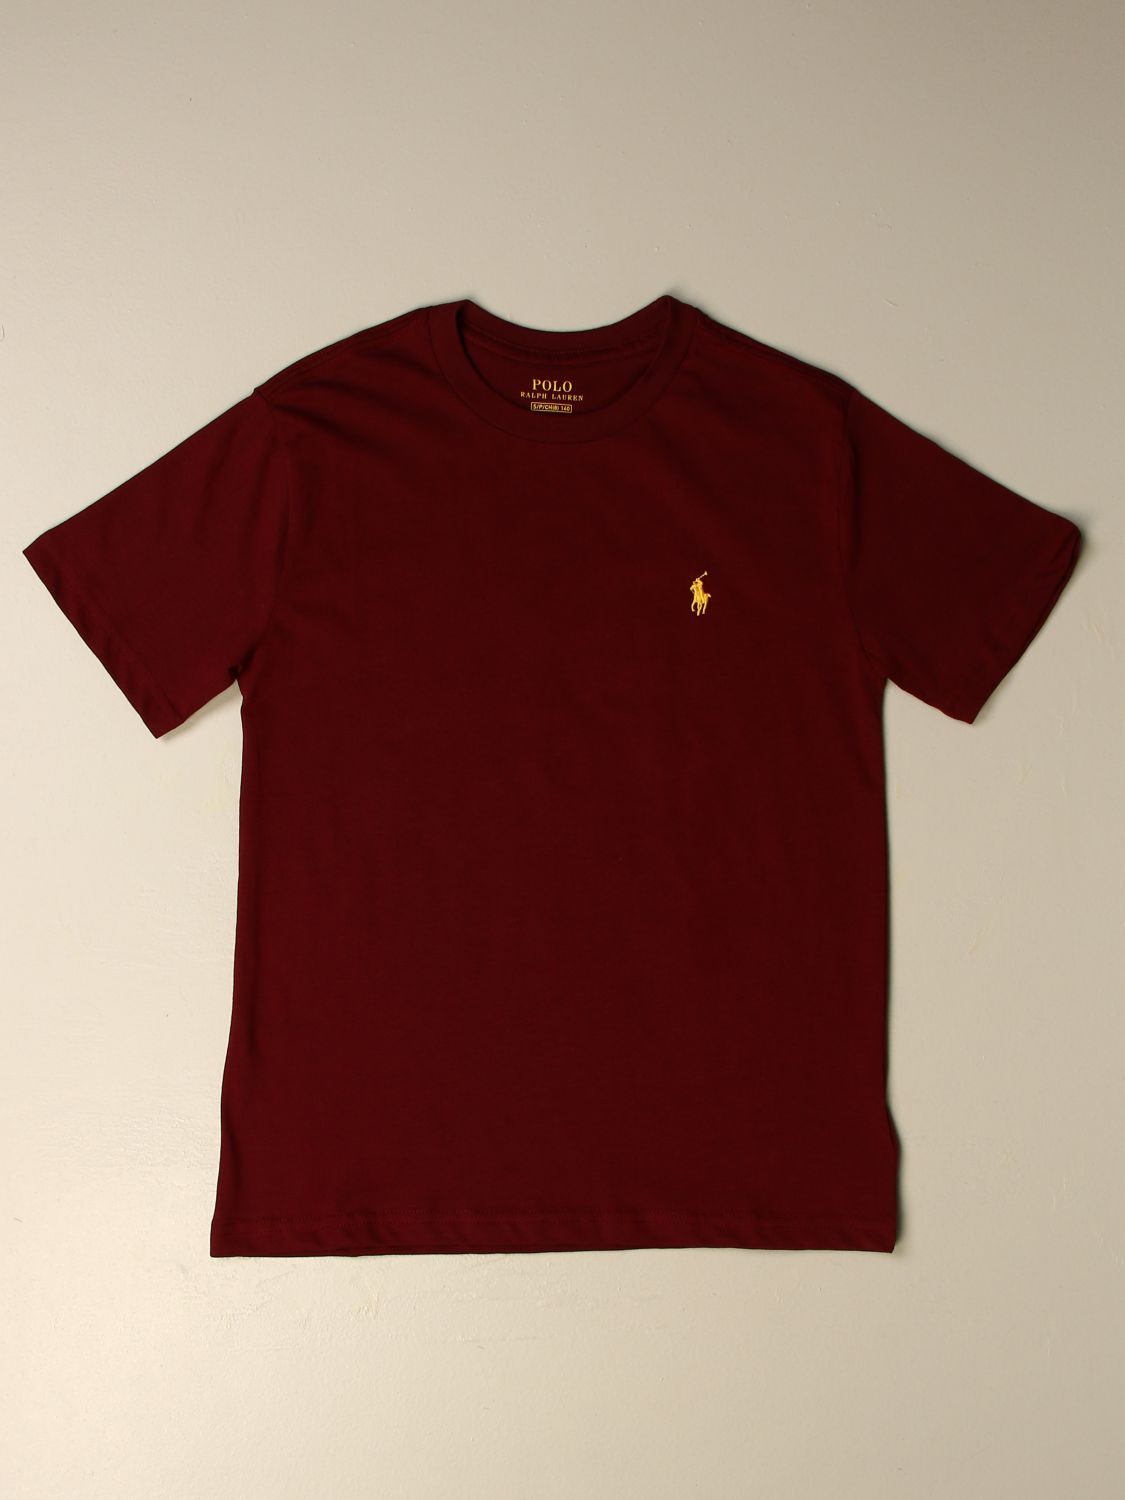 maroon polo ralph lauren shirt